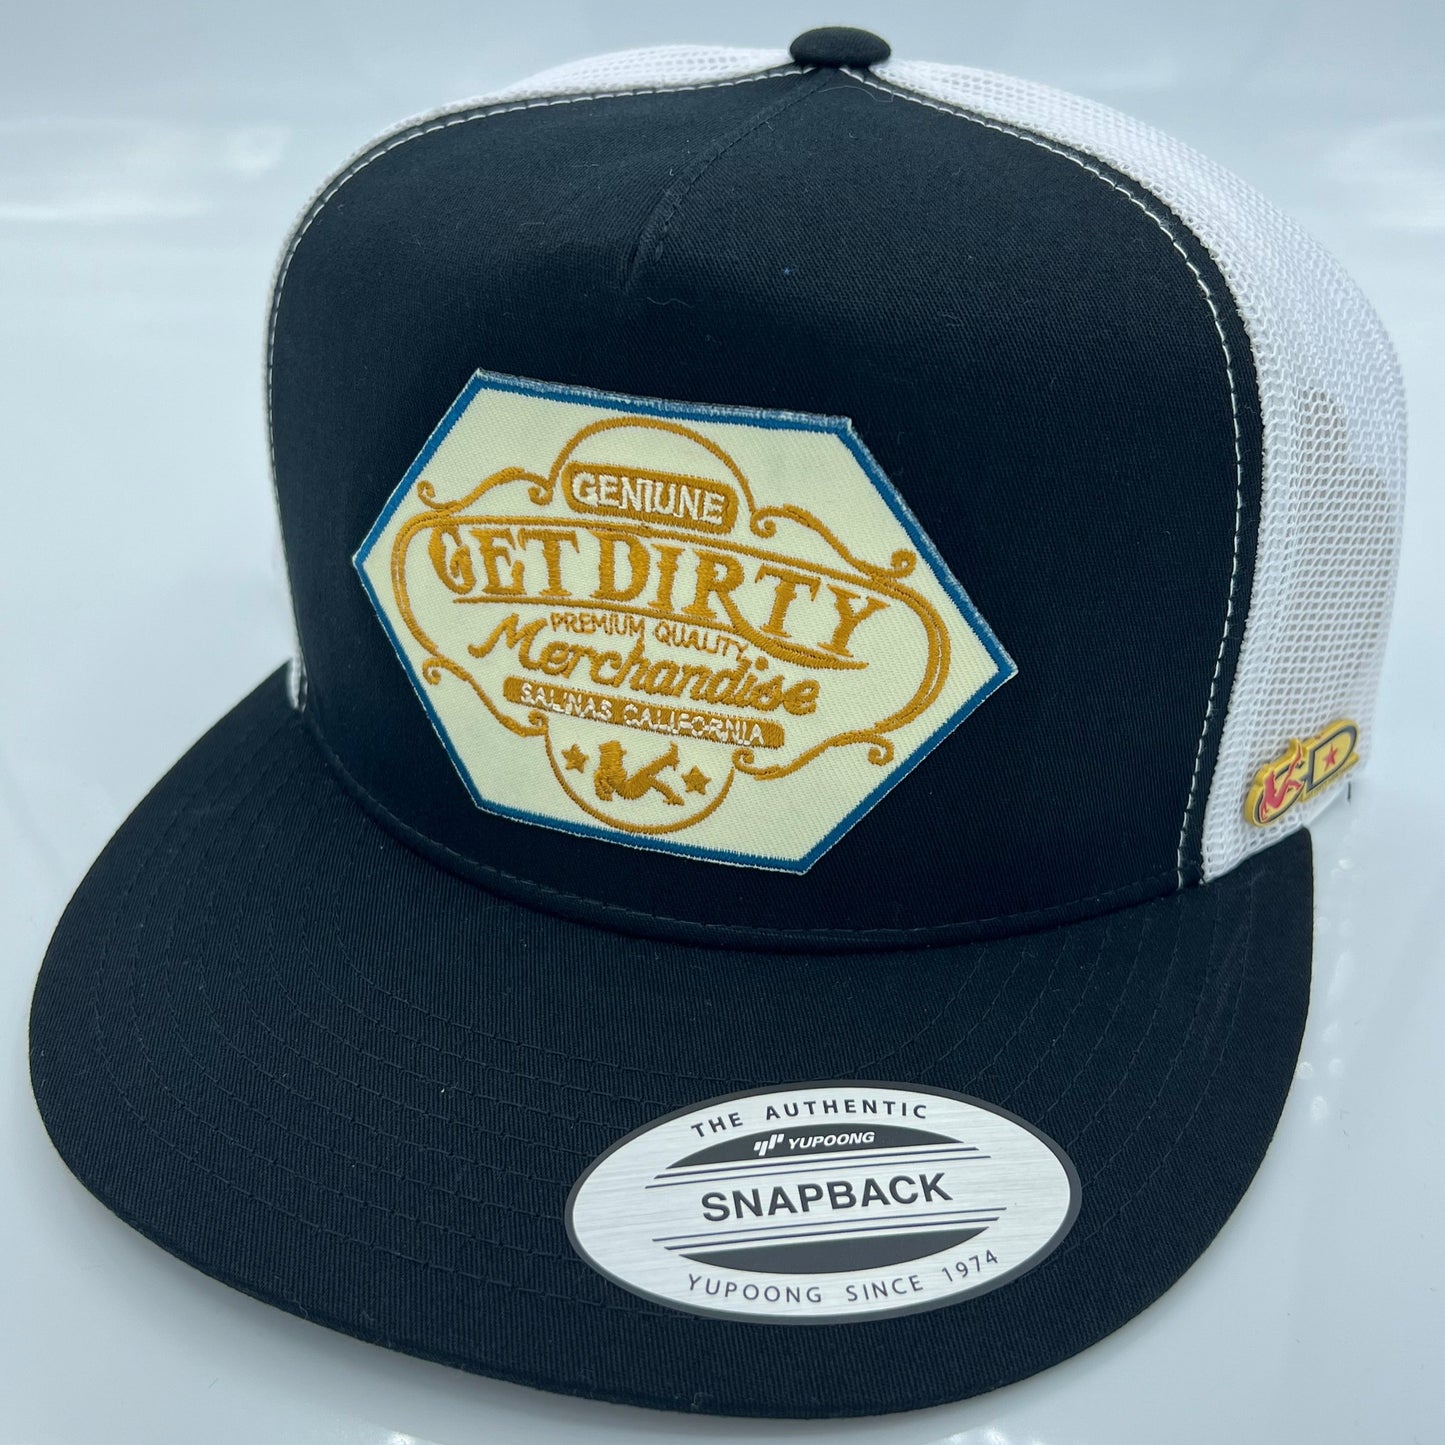 Get Dirty Merchandise Ivory Balaclava Blk/Wht Trucker Hat